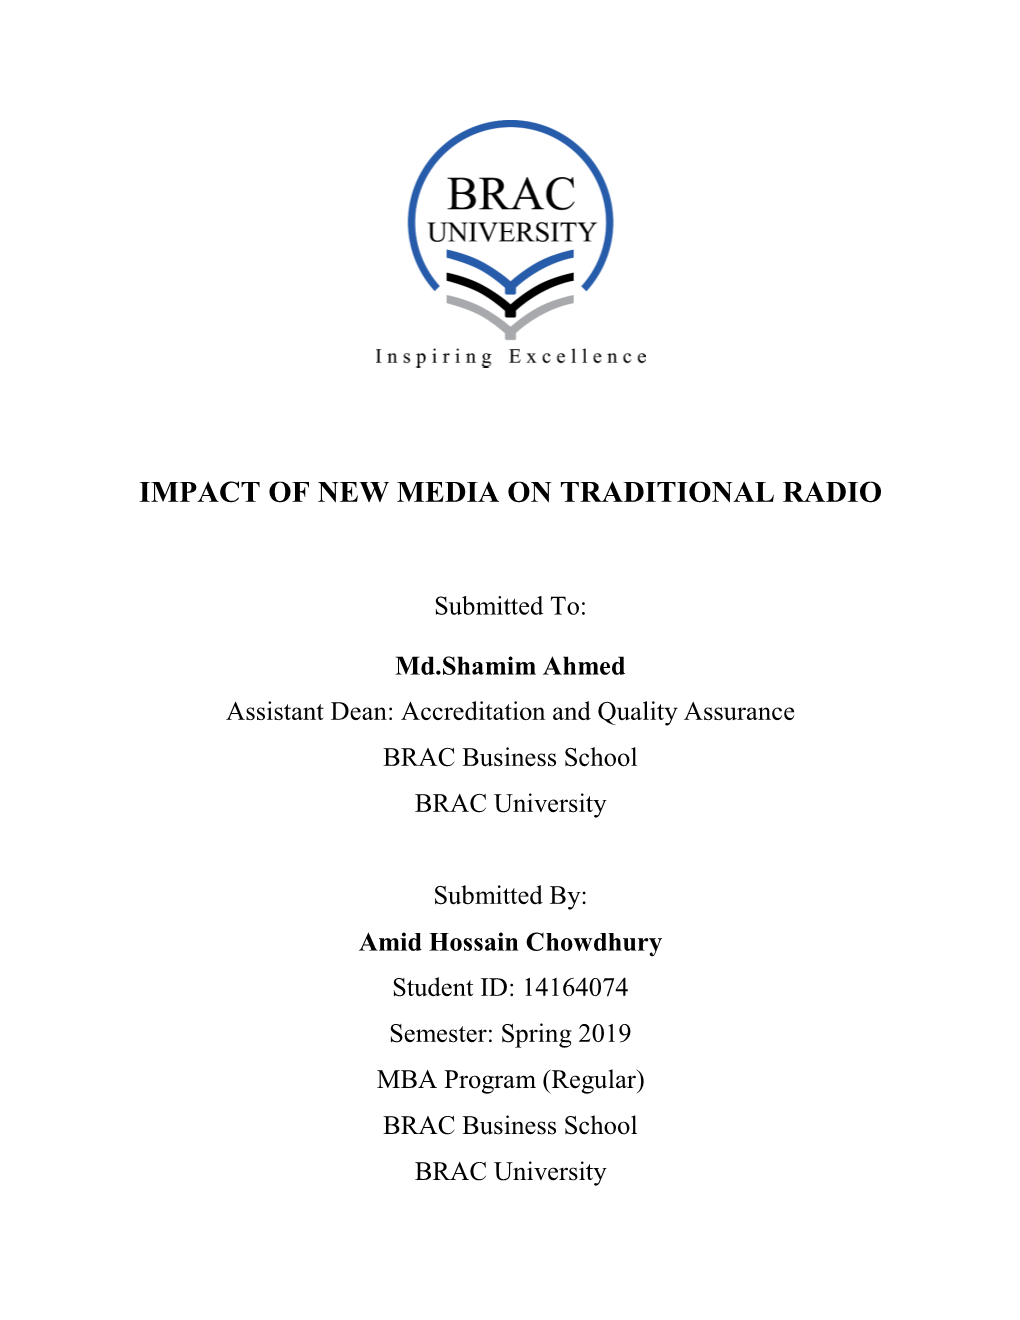 Impact of New Media on Traditional Radio